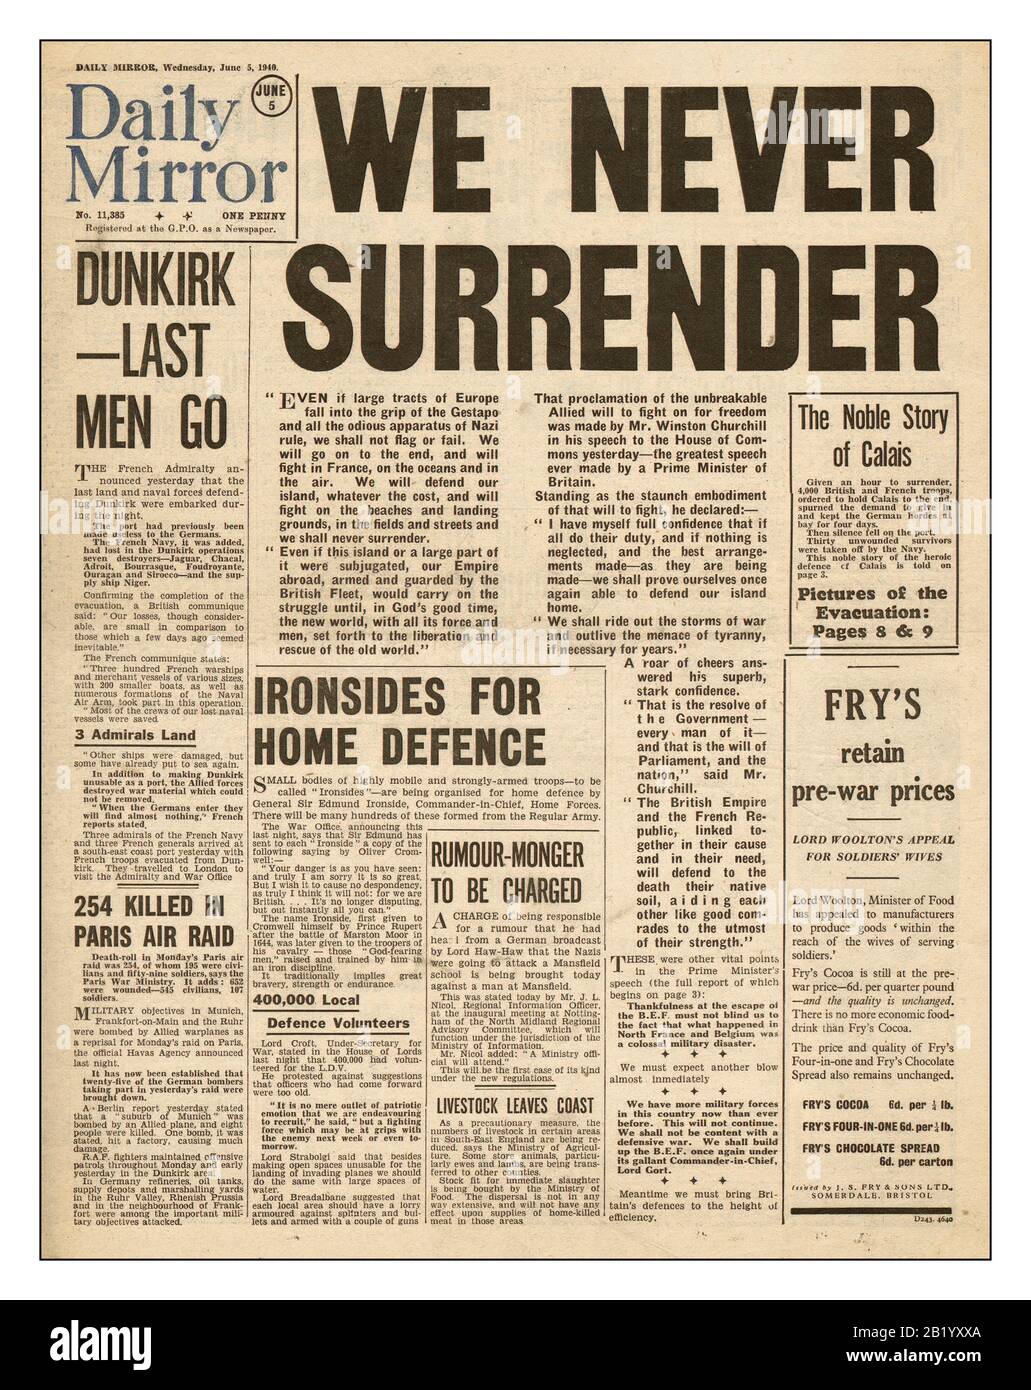 DISCURSO DE CHURCHILL WW2 Archive Segunda Guerra Mundial periódicos  titulares 5 de junio 1940 "NUNCA NOS RENDIMOS" Daily Mirror. El mayor  discurso inspirador de guerra pronunciado por un primer Ministro de Gran